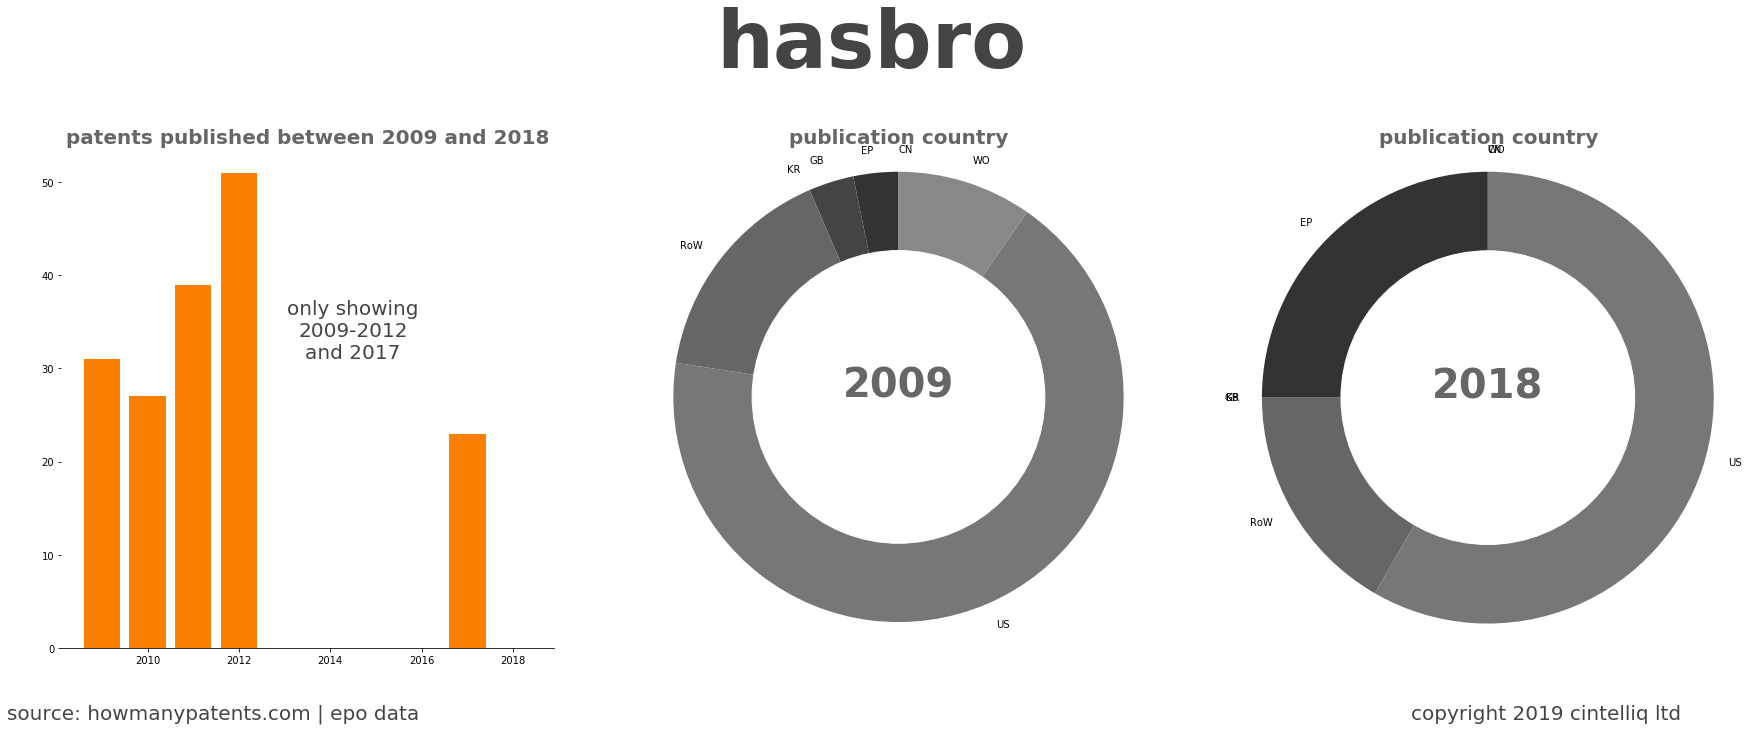 summary of patents for Hasbro